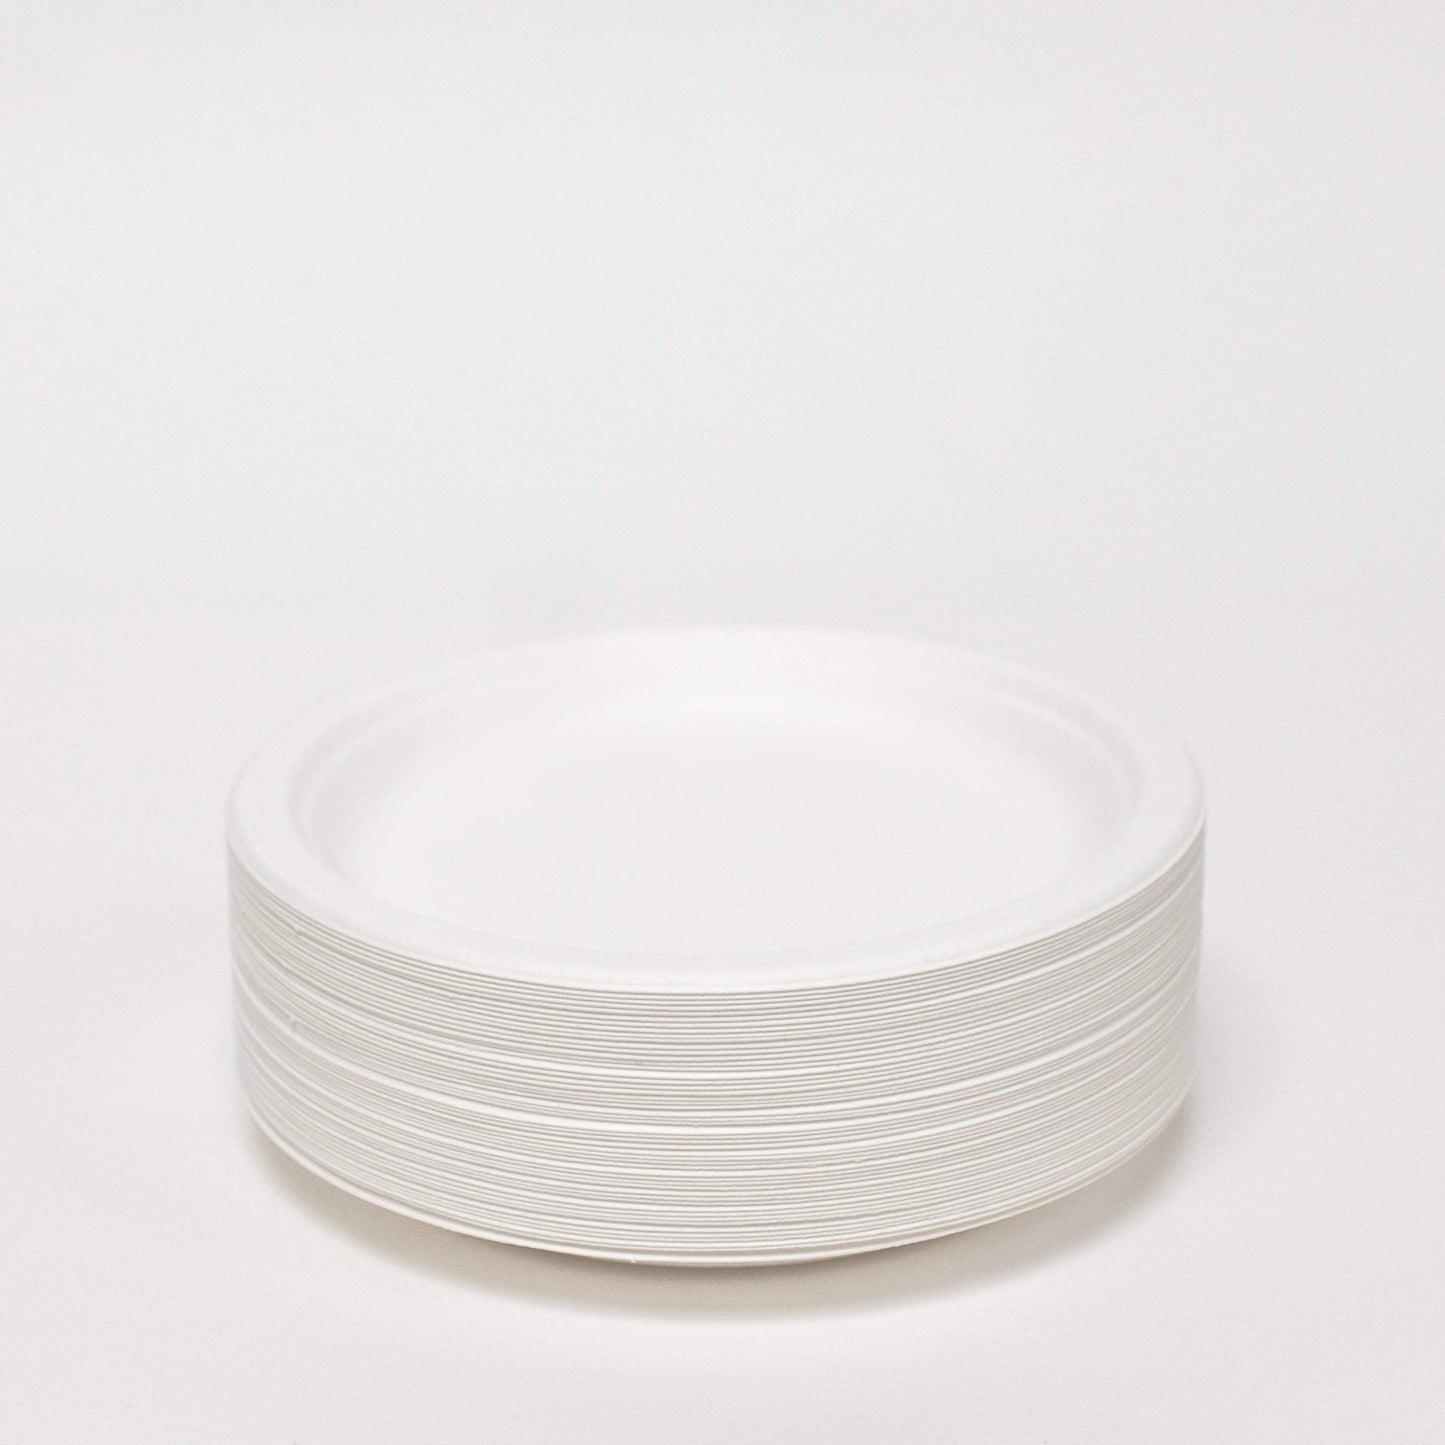 Eco Friendly Tableware | Bagasse Plates | Compostable Plates UK Pretty Little Party Shop